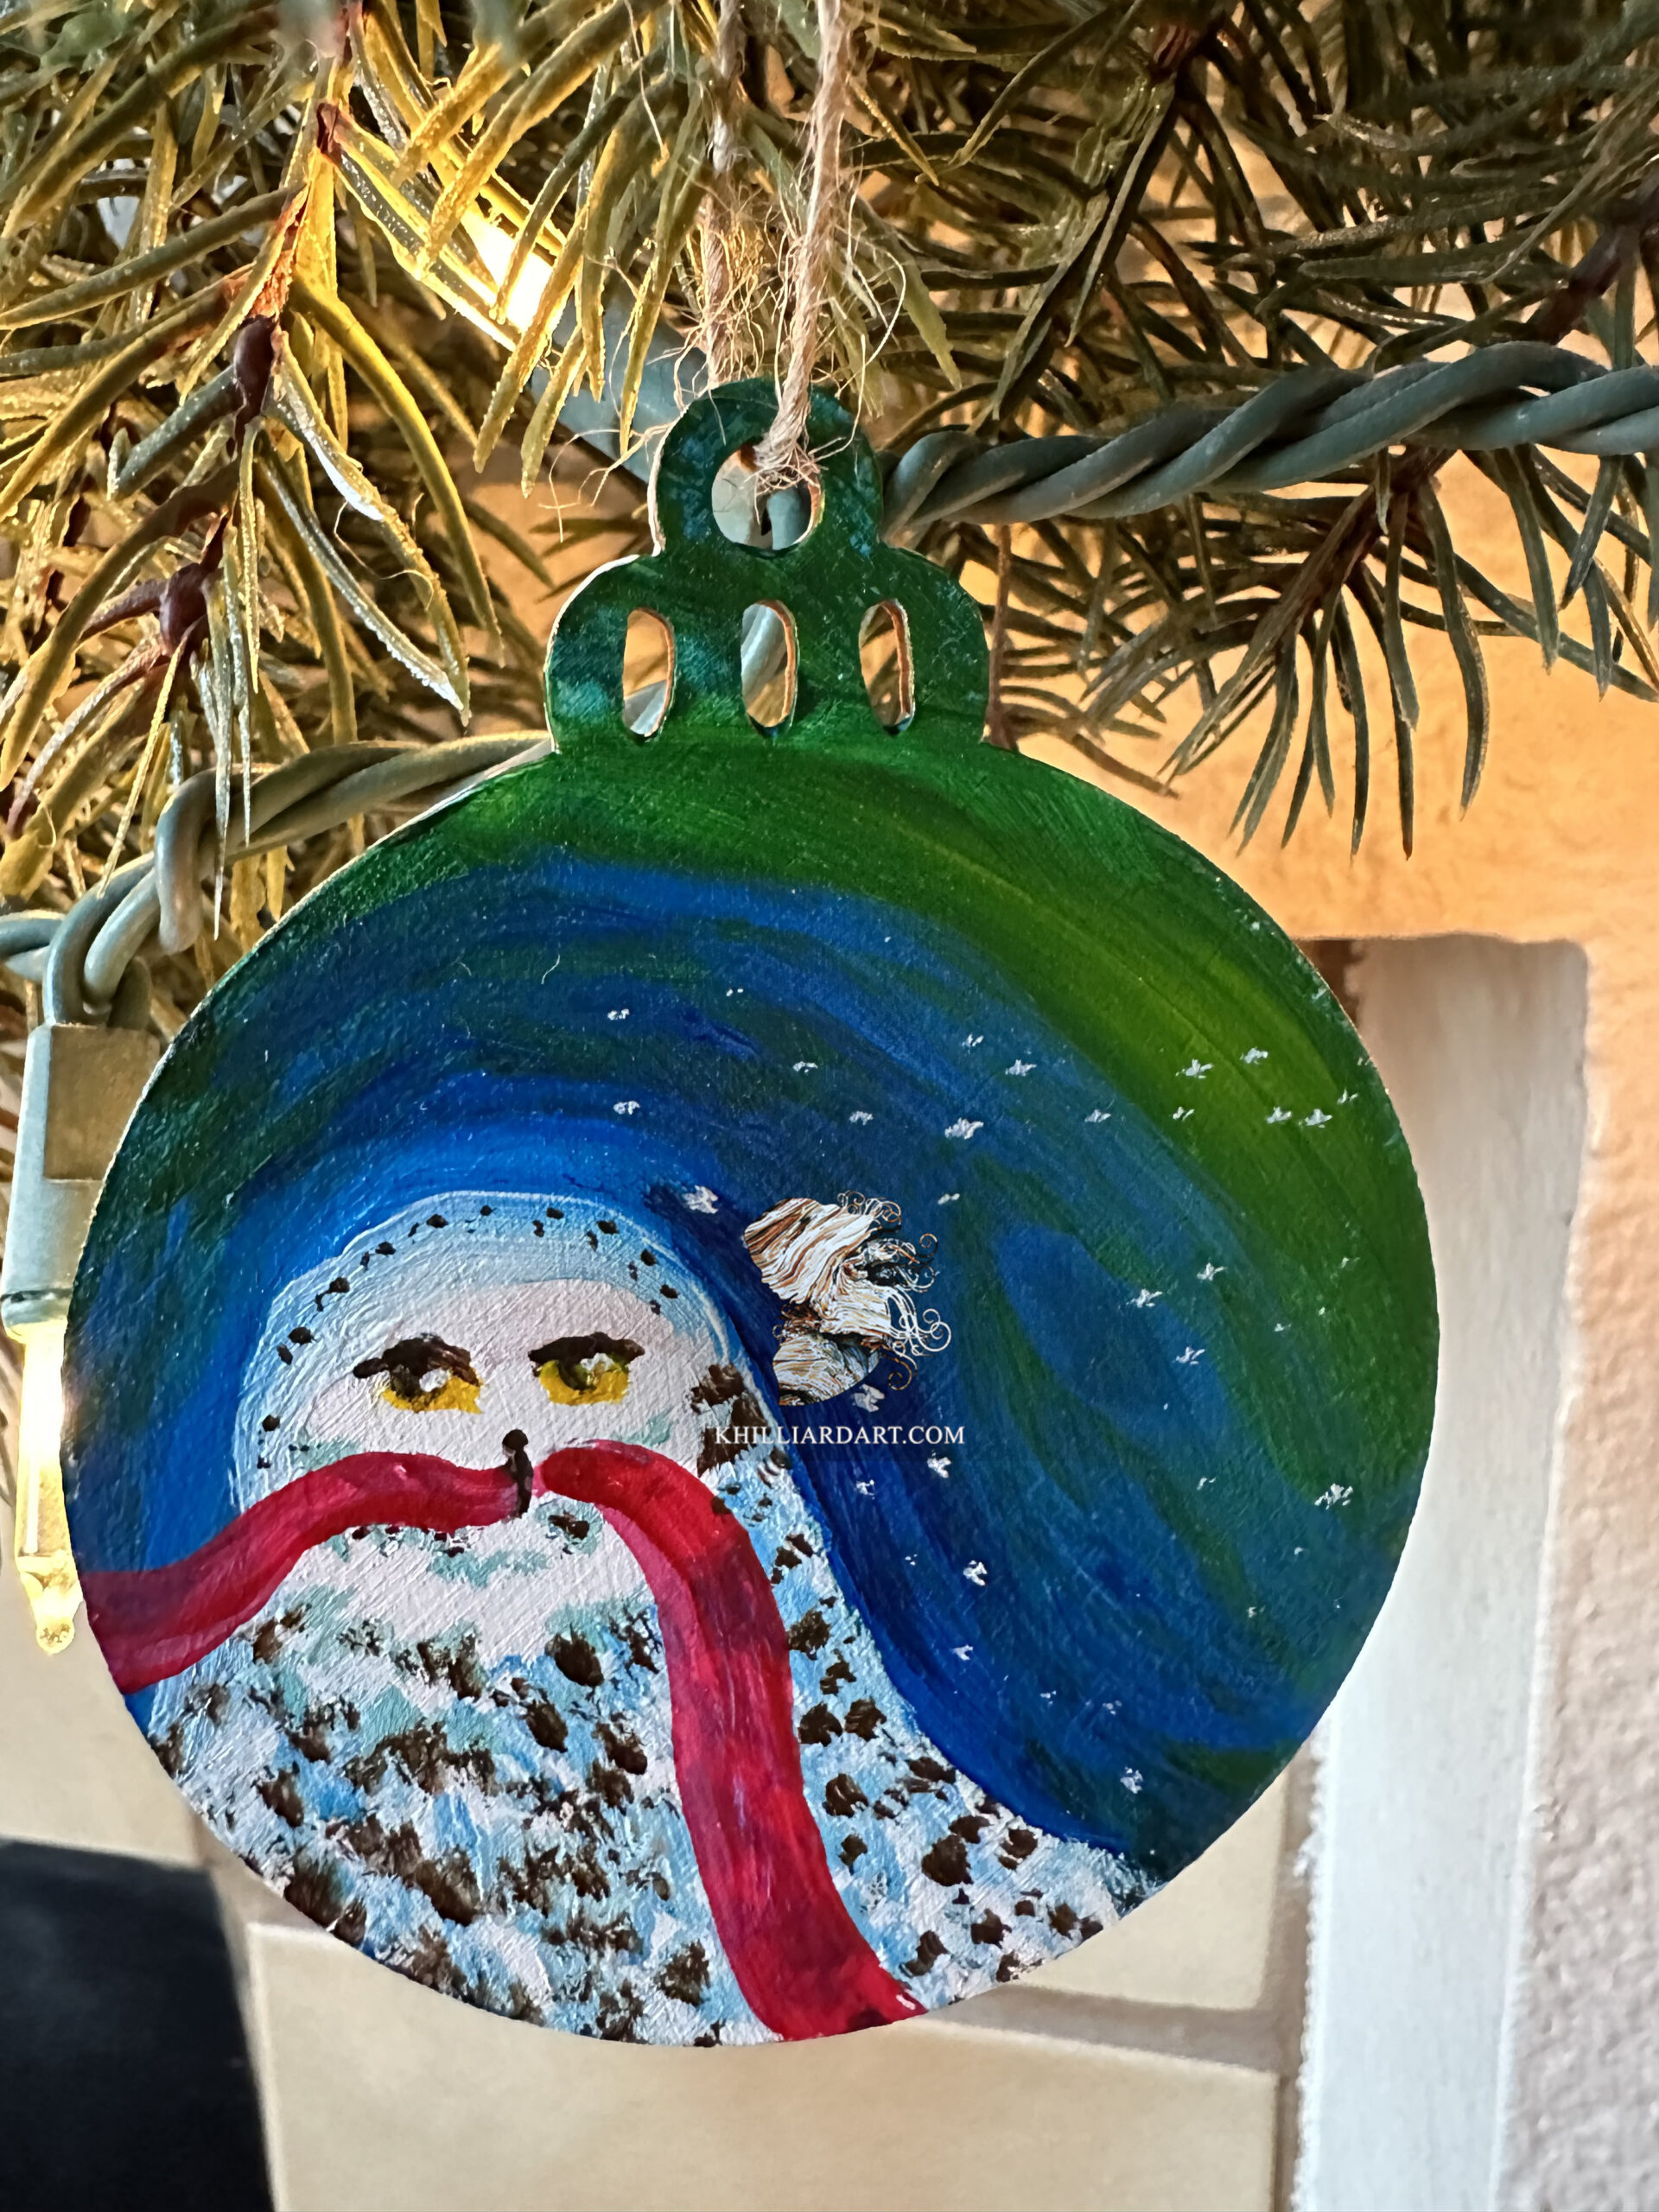 Snowy Owl Helper 1 | Karen Hilliard Art | Ornaments